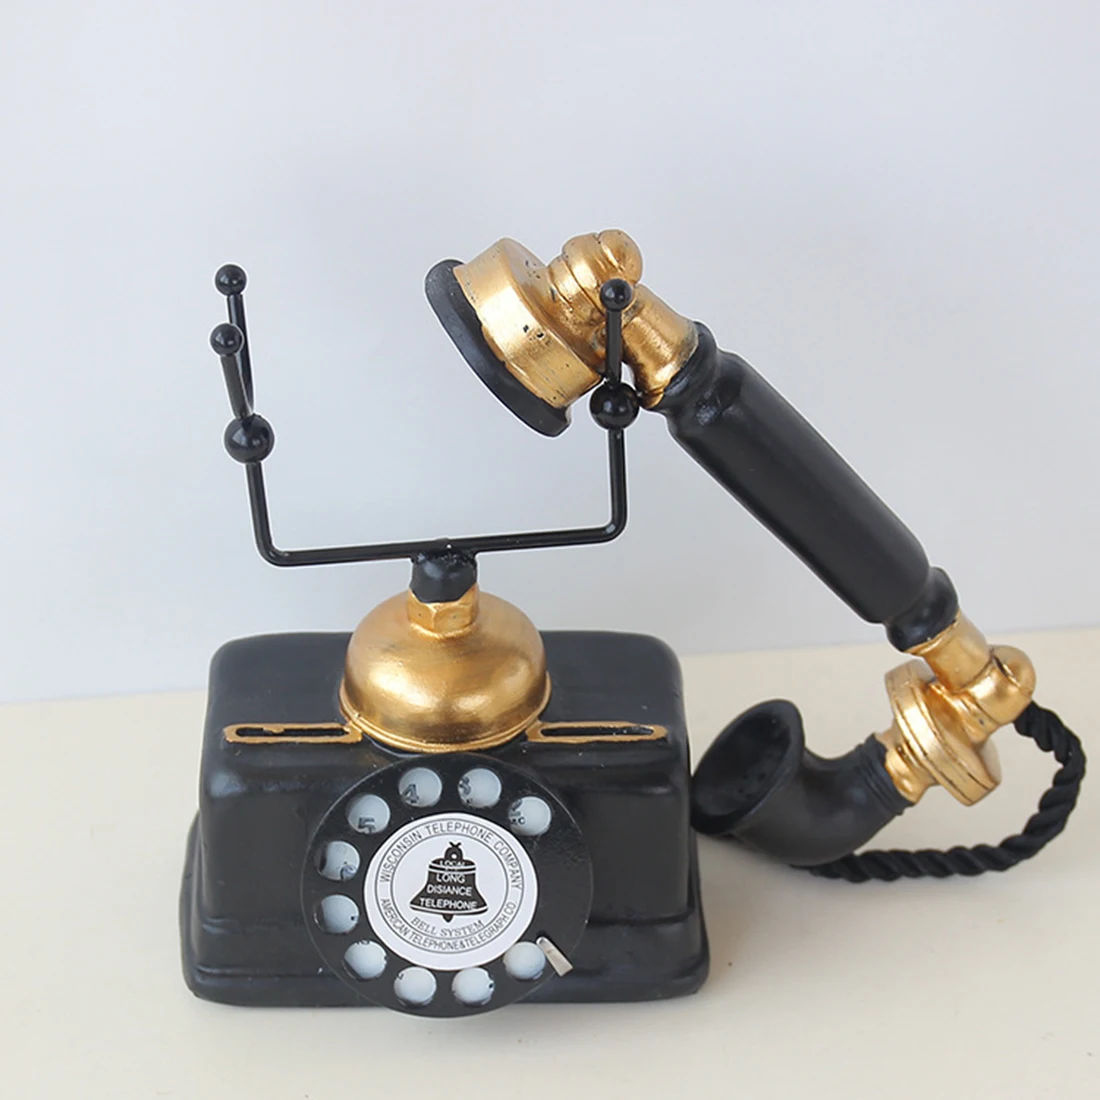 Vintage Resin Telephone Model Miniature Telephone Figurine Antique Craft Desktop Home Office Decor Accessories- Black